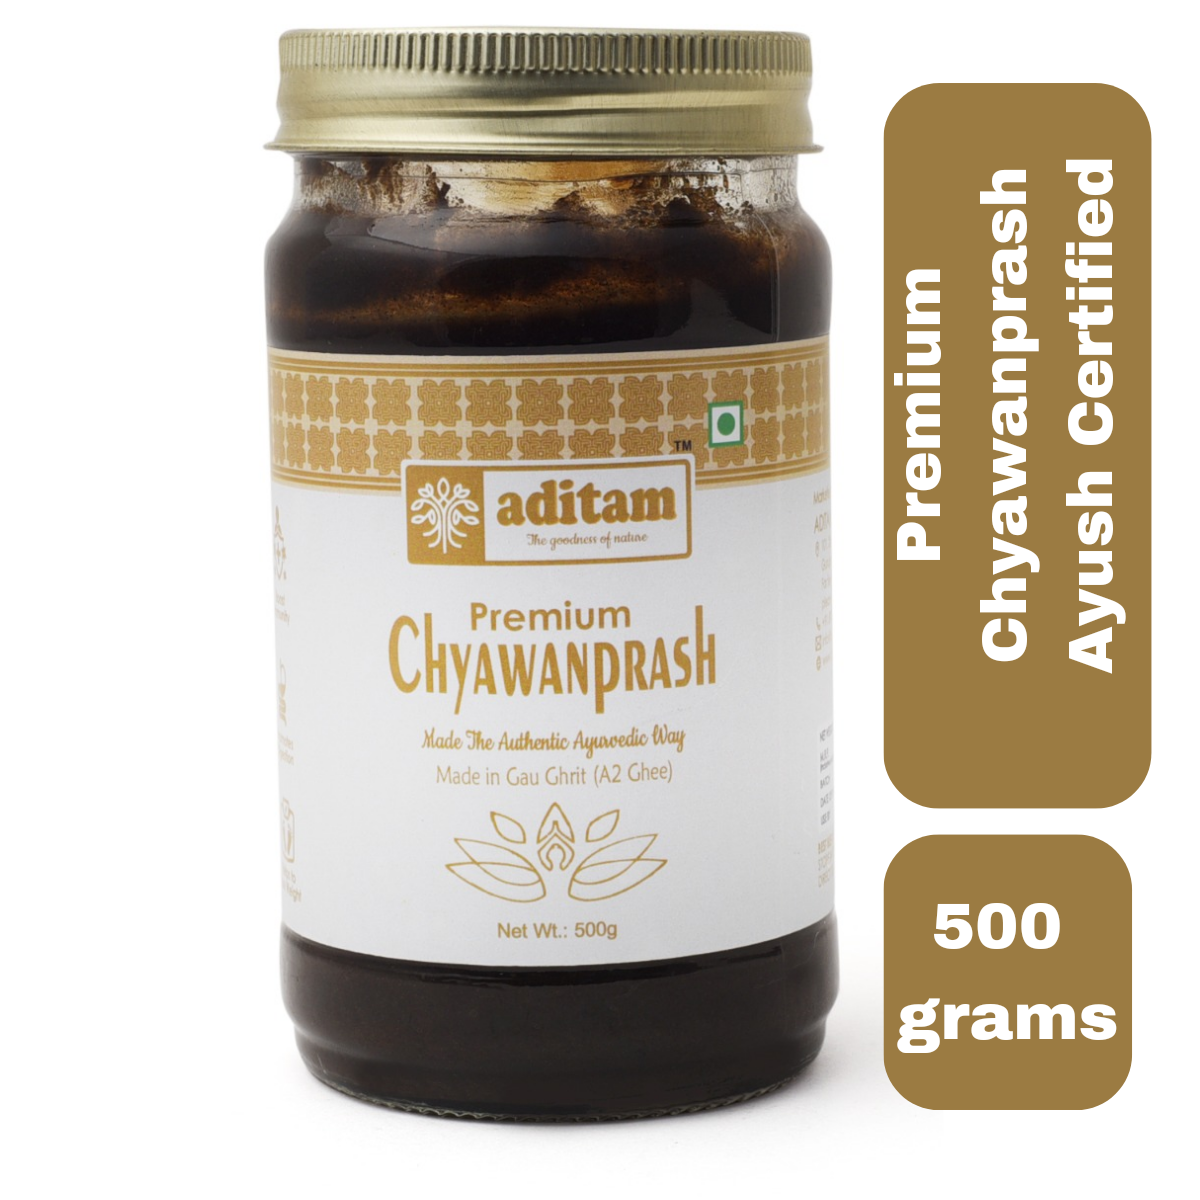 Product: Aditam Premium Ayurvedic Chayawanprash